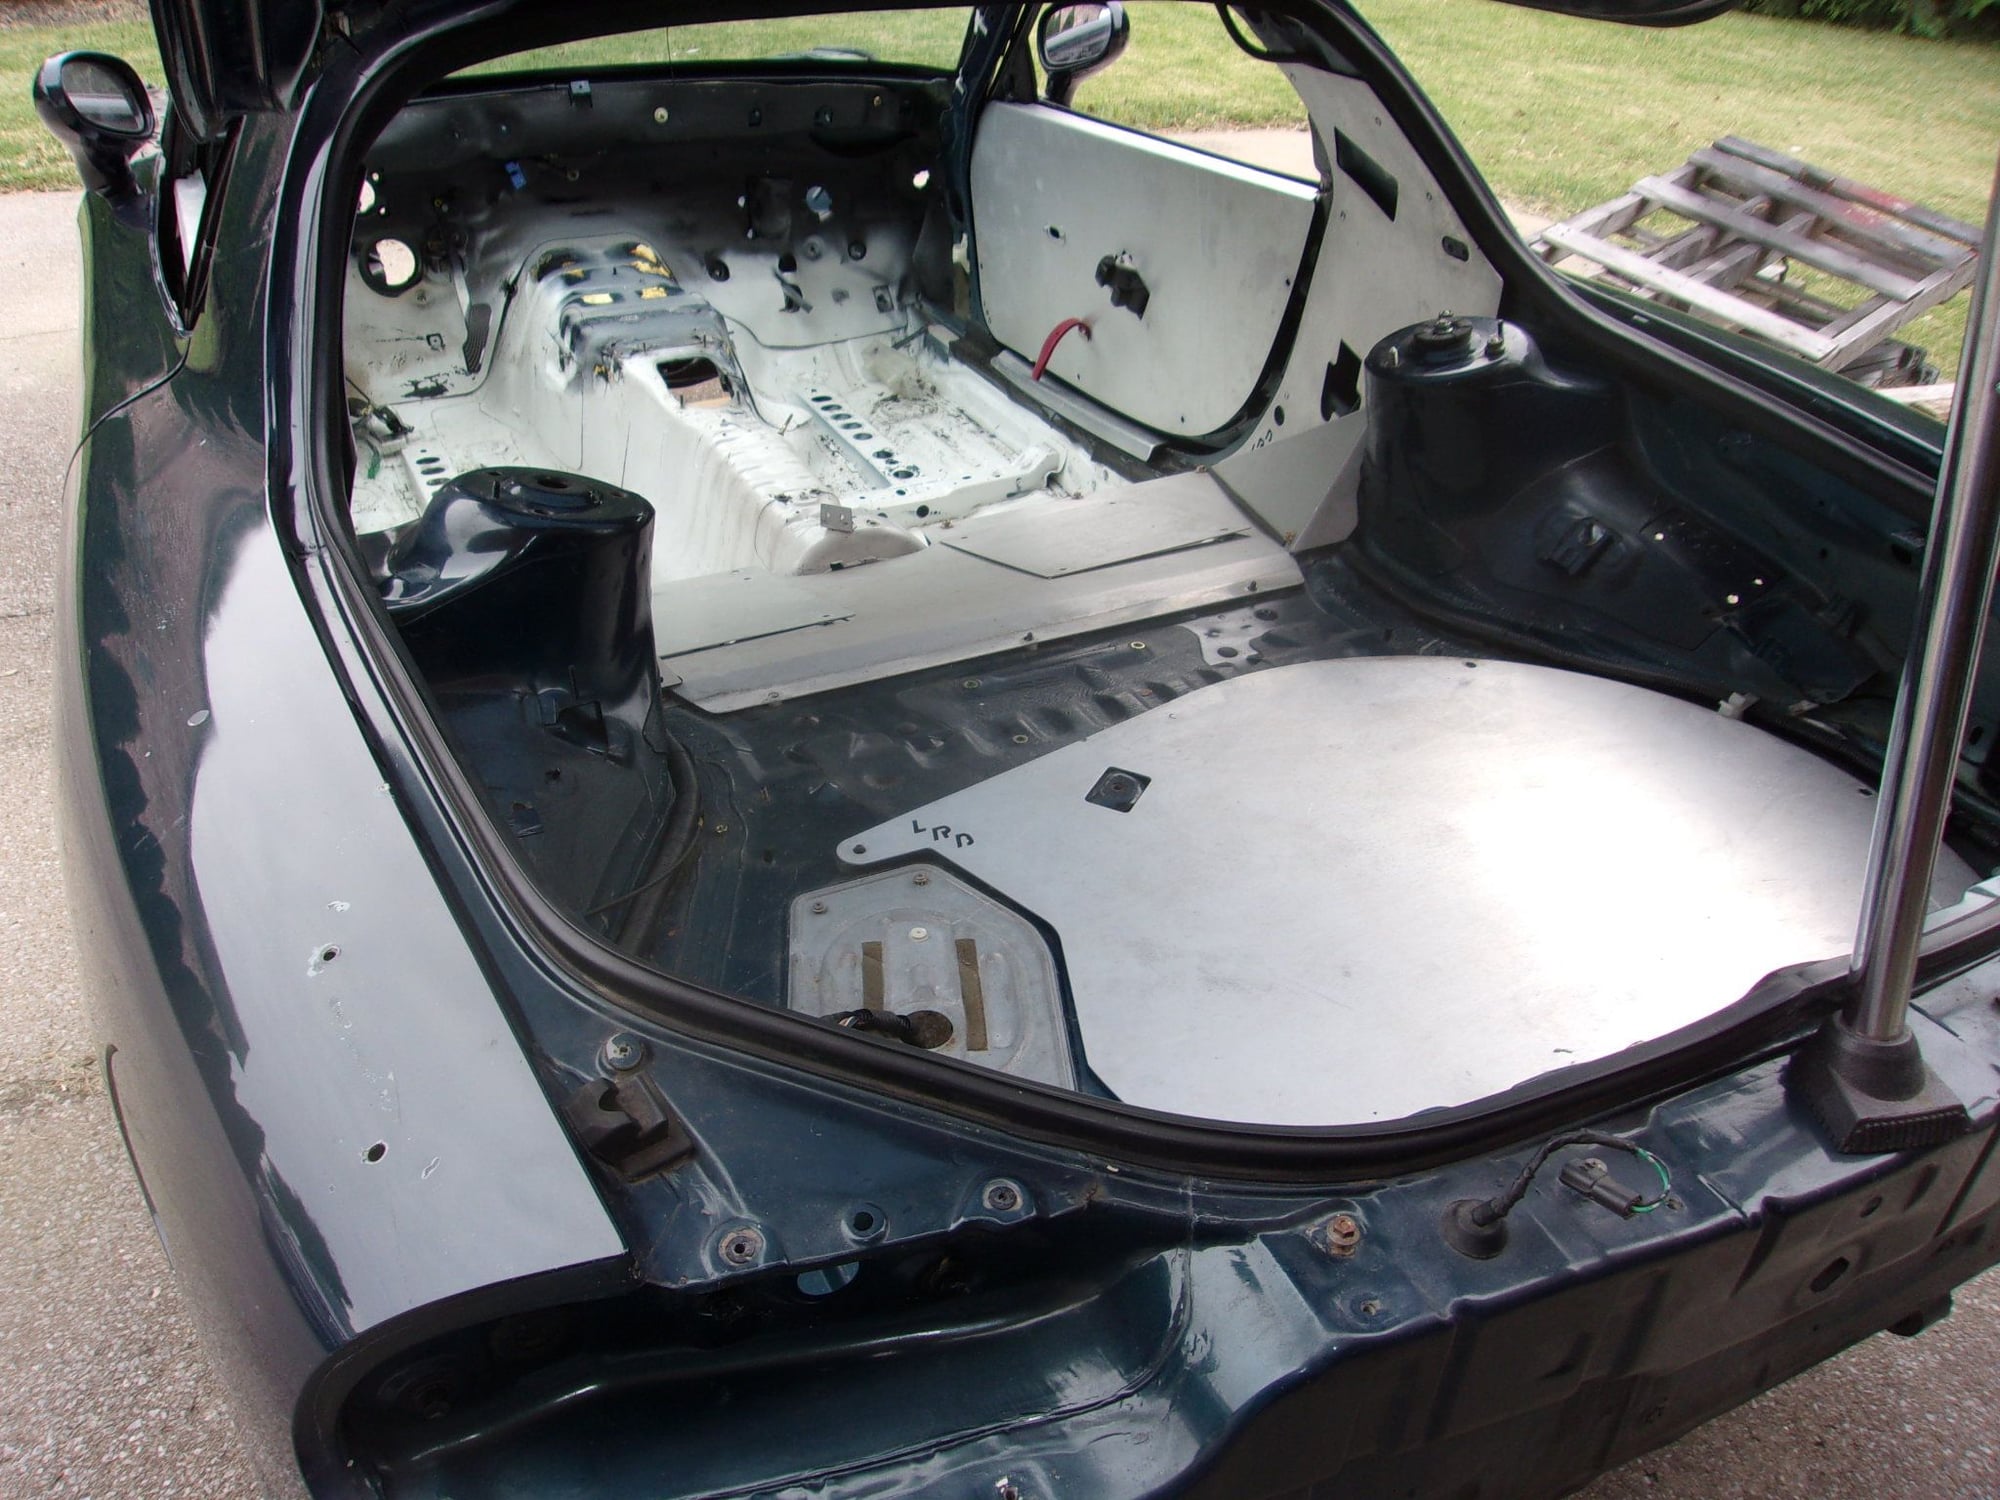 Interior/Upholstery - LRB Interior - Used - 1993 to 2002 Mazda RX-7 - Murfreesboro, TN 37130, United States